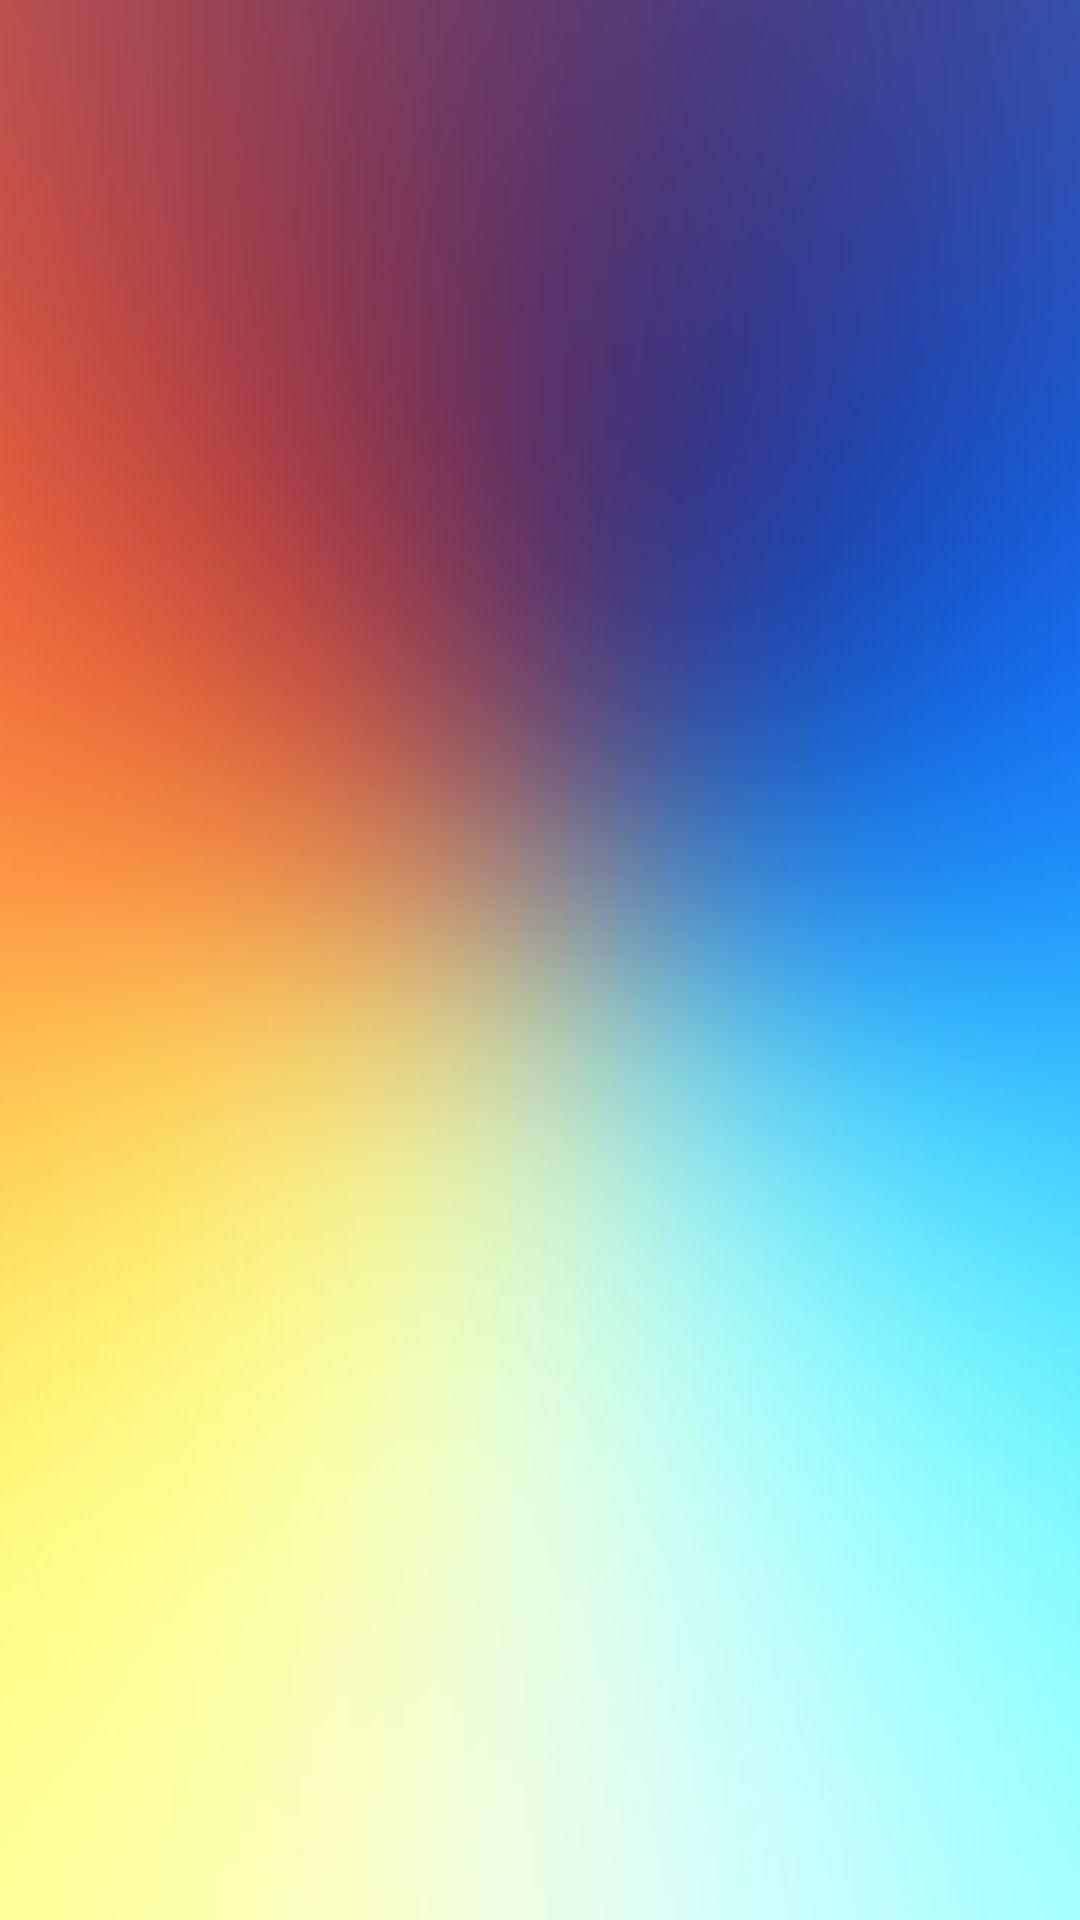 Rainbow Circle Reverse Gradation Blur iPhone 6 wallpaper. Colors